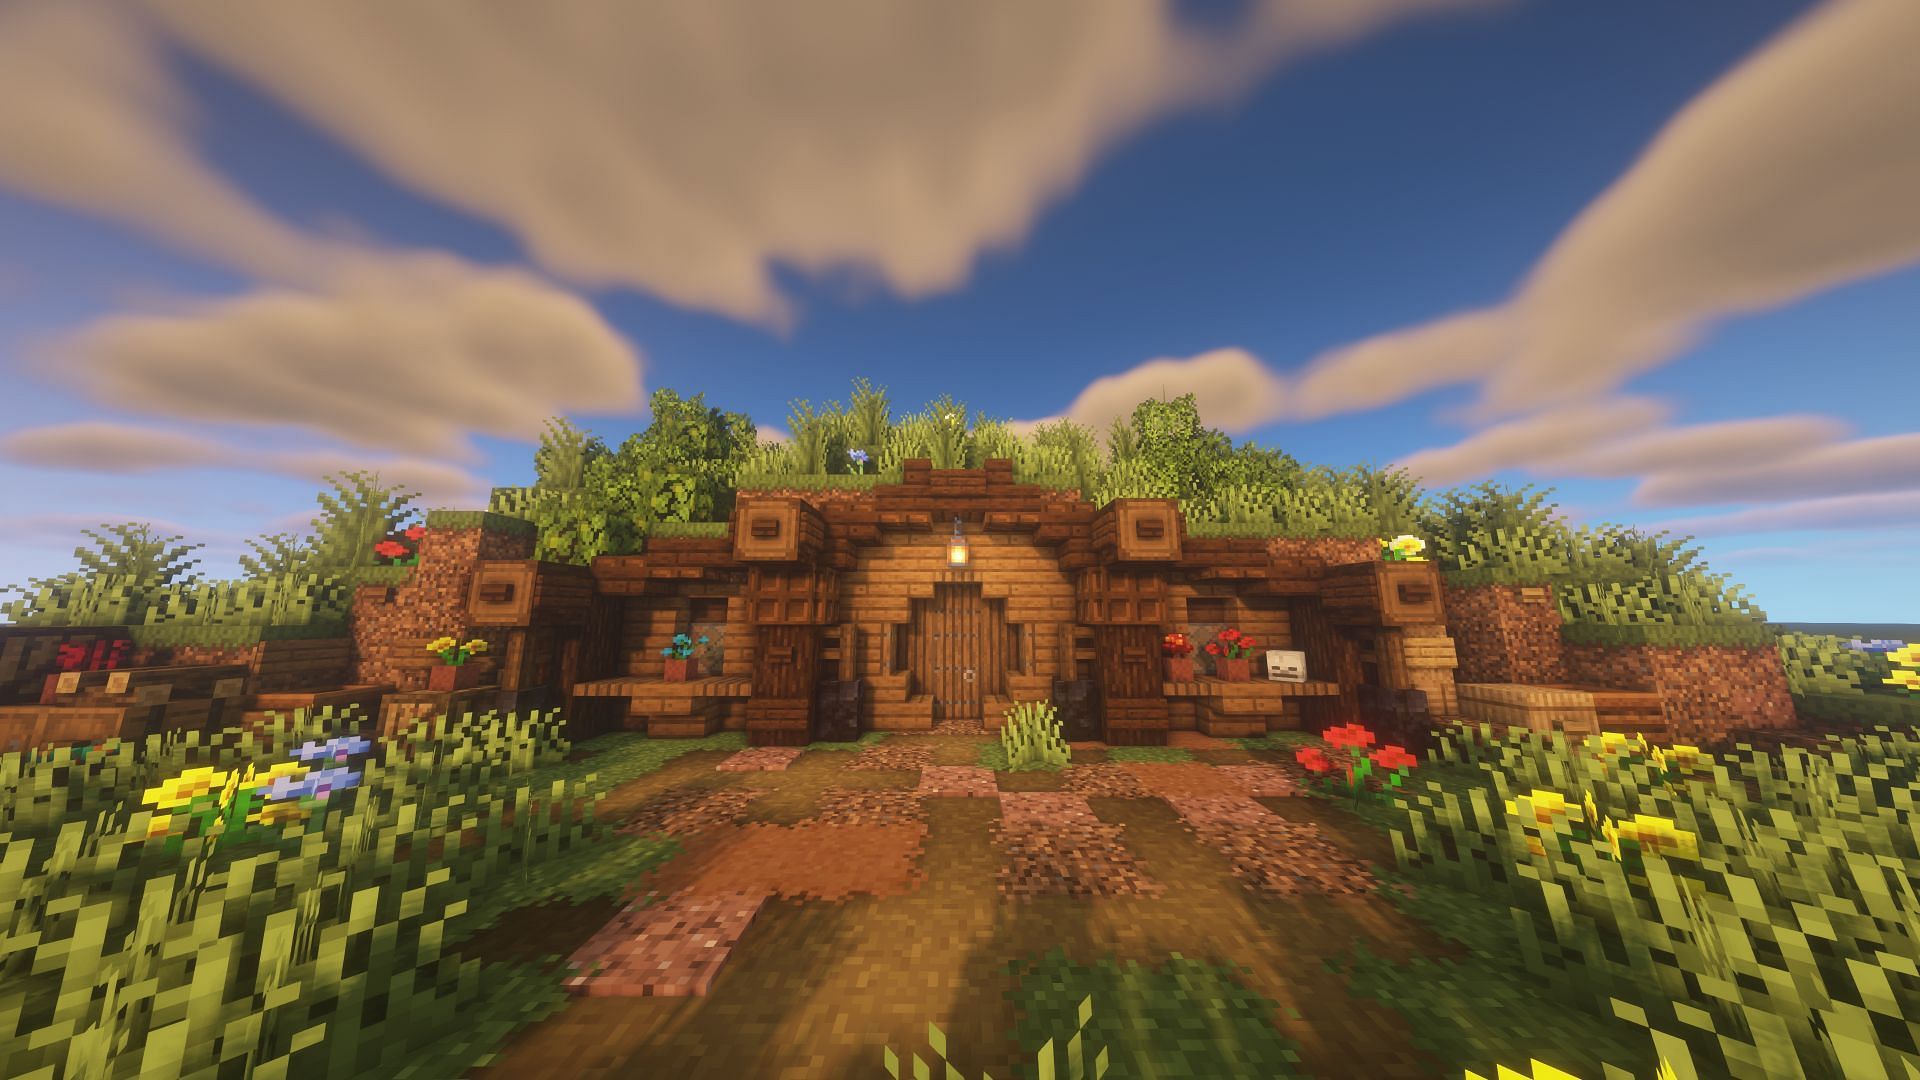 Classic hobbit hole inside a hill is still the best in Minecraft (Image via Reddit/u/Igor_Gyepreteper)